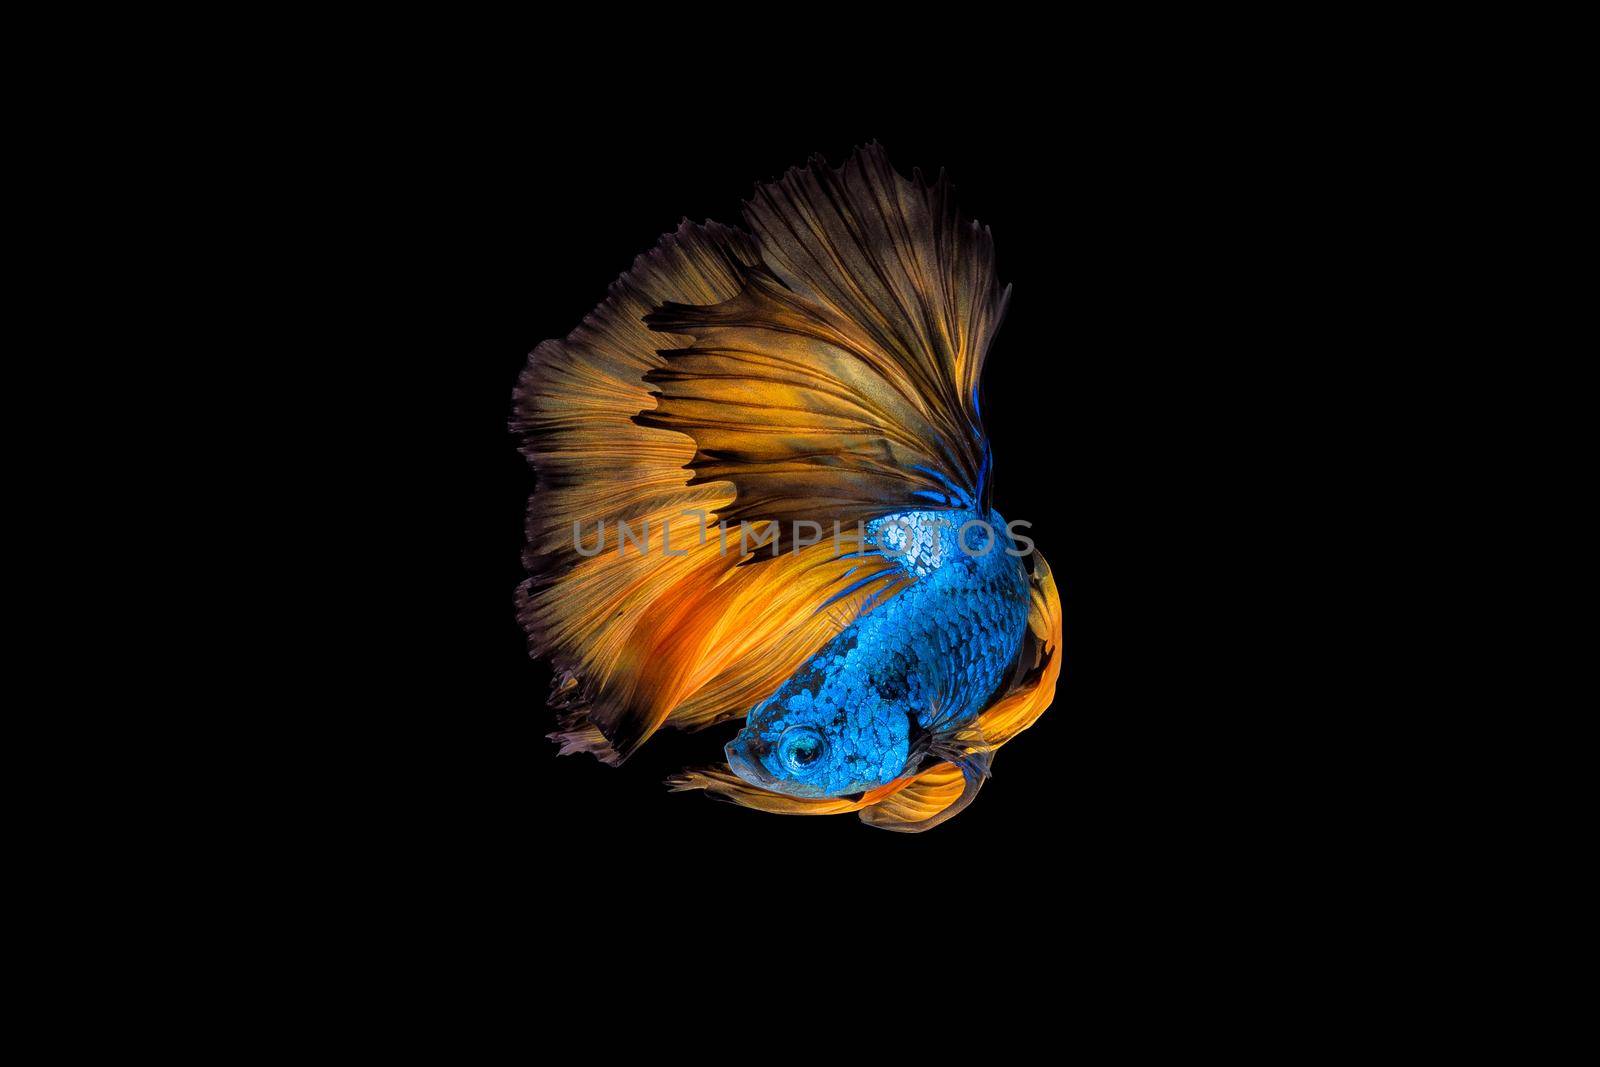 Colourful Betta fish,Siamese fighting fish in movement on black background by Nuamfolio